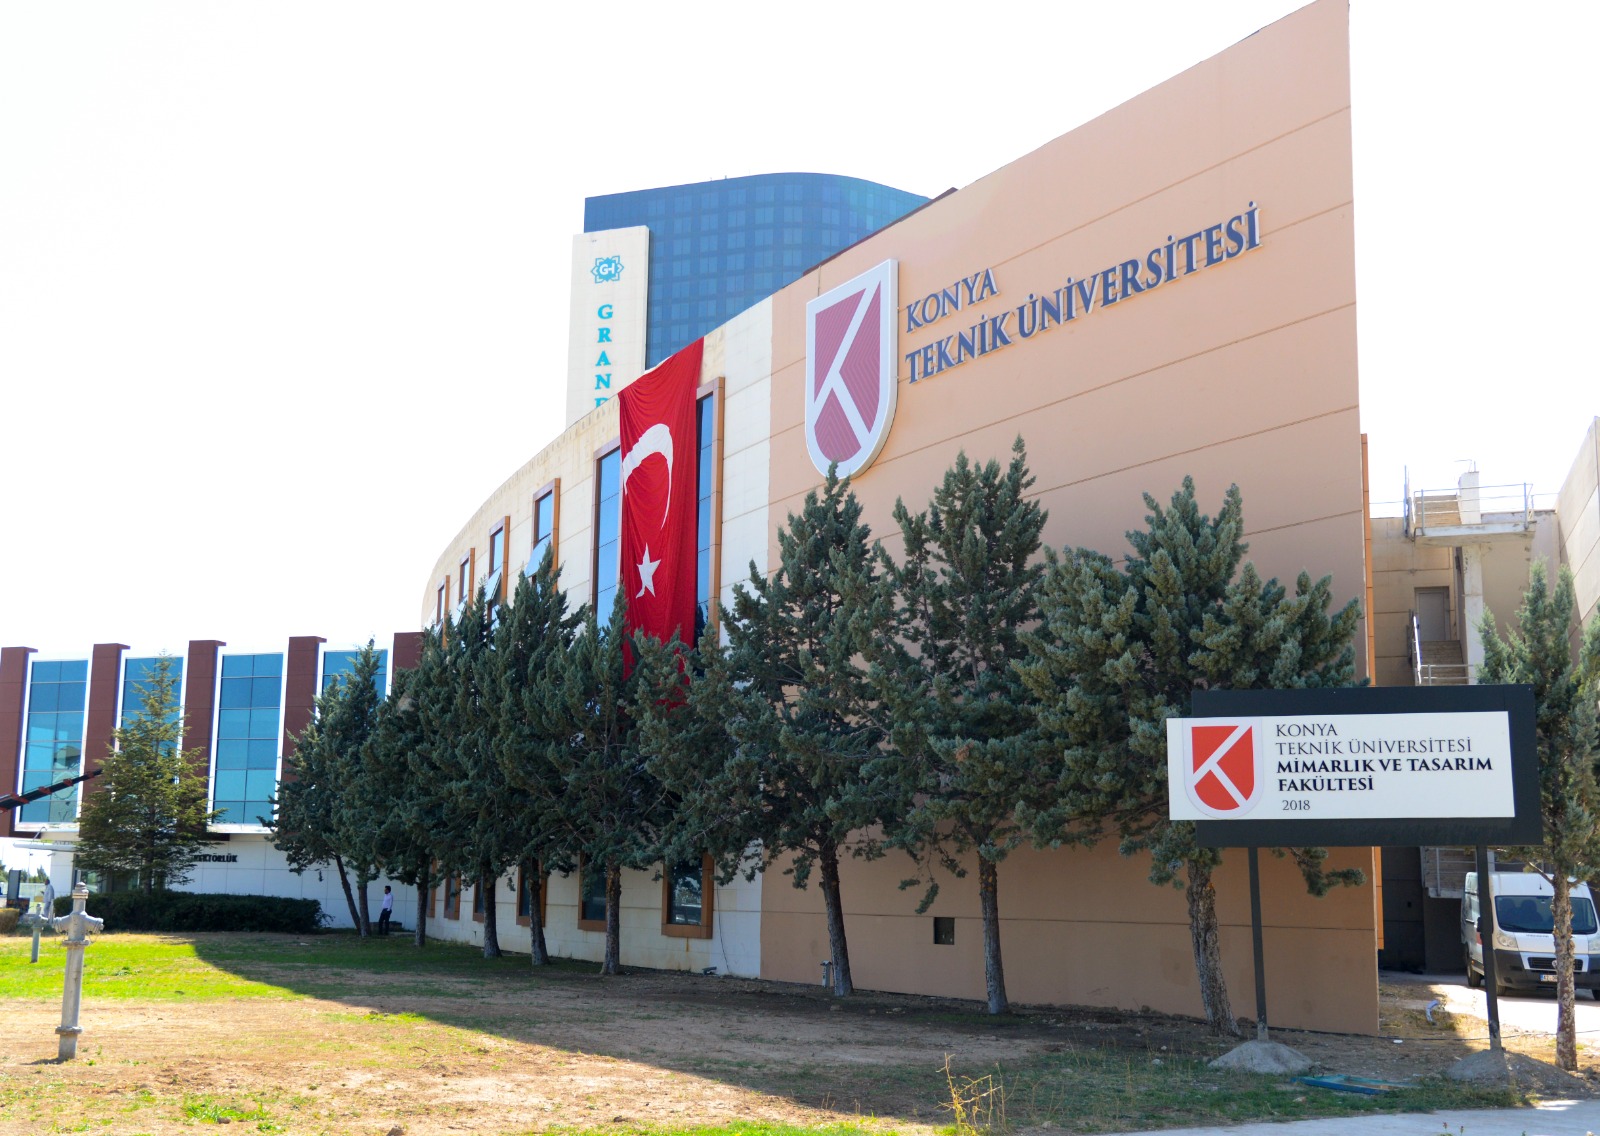 konyateknik universitesi find and study 6 - Université technique de Konya